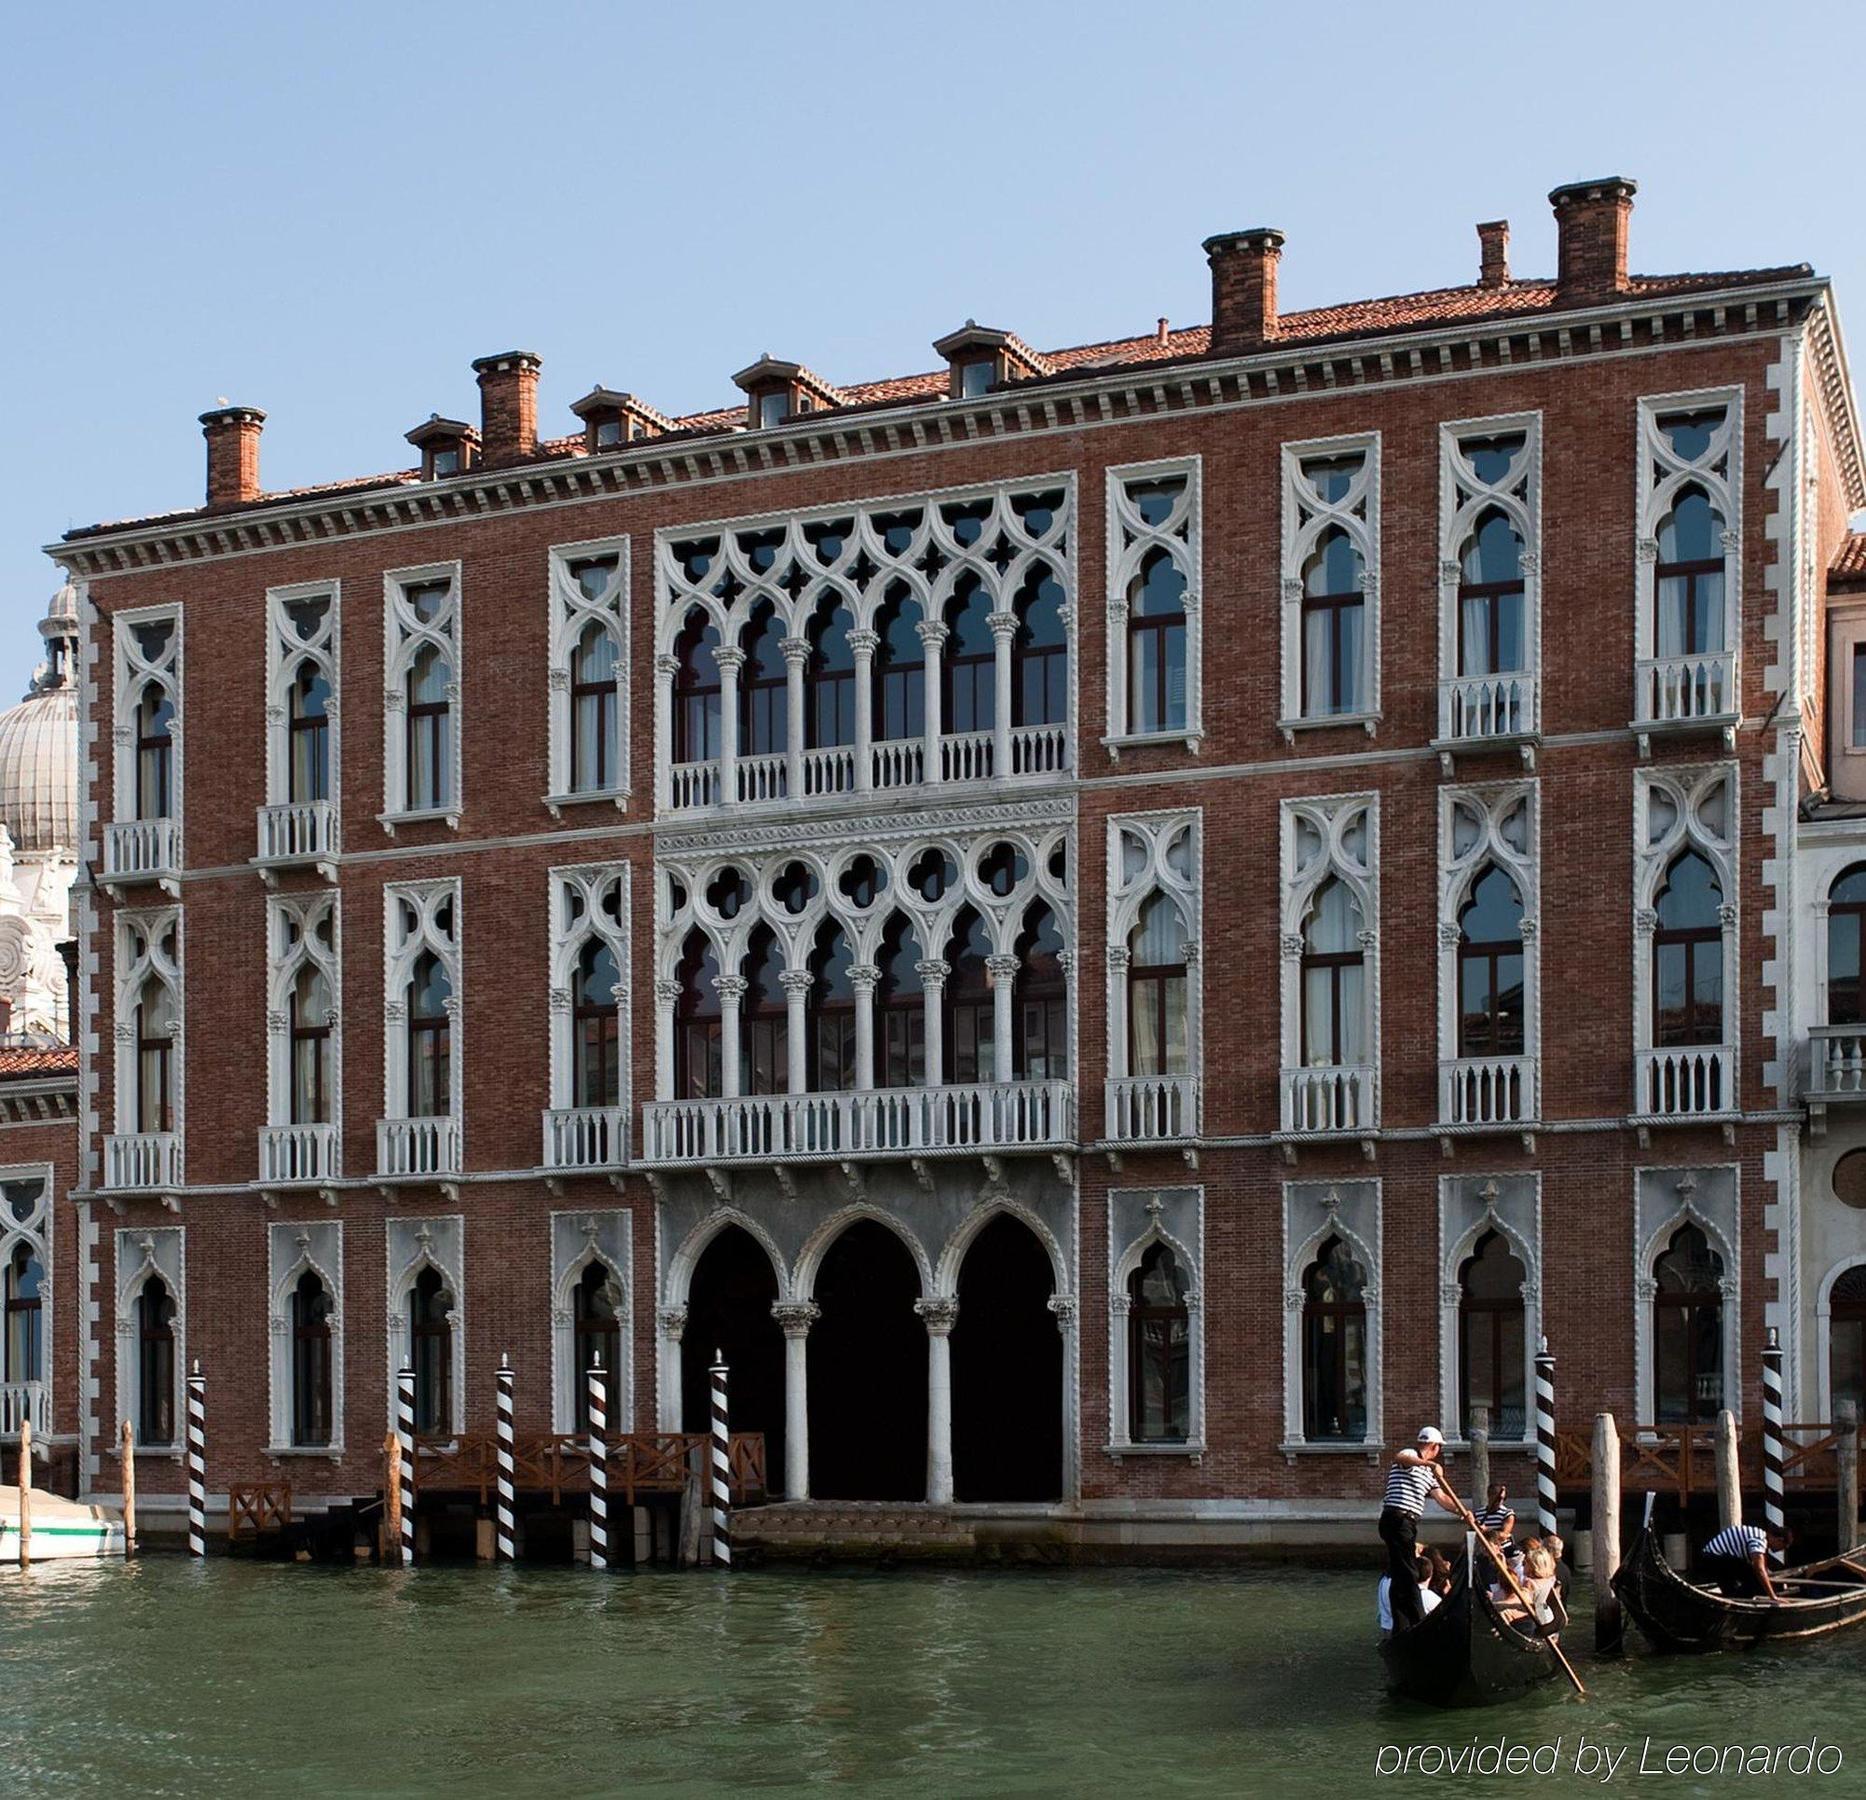 Sina Centurion Palace Venice Ngoại thất bức ảnh